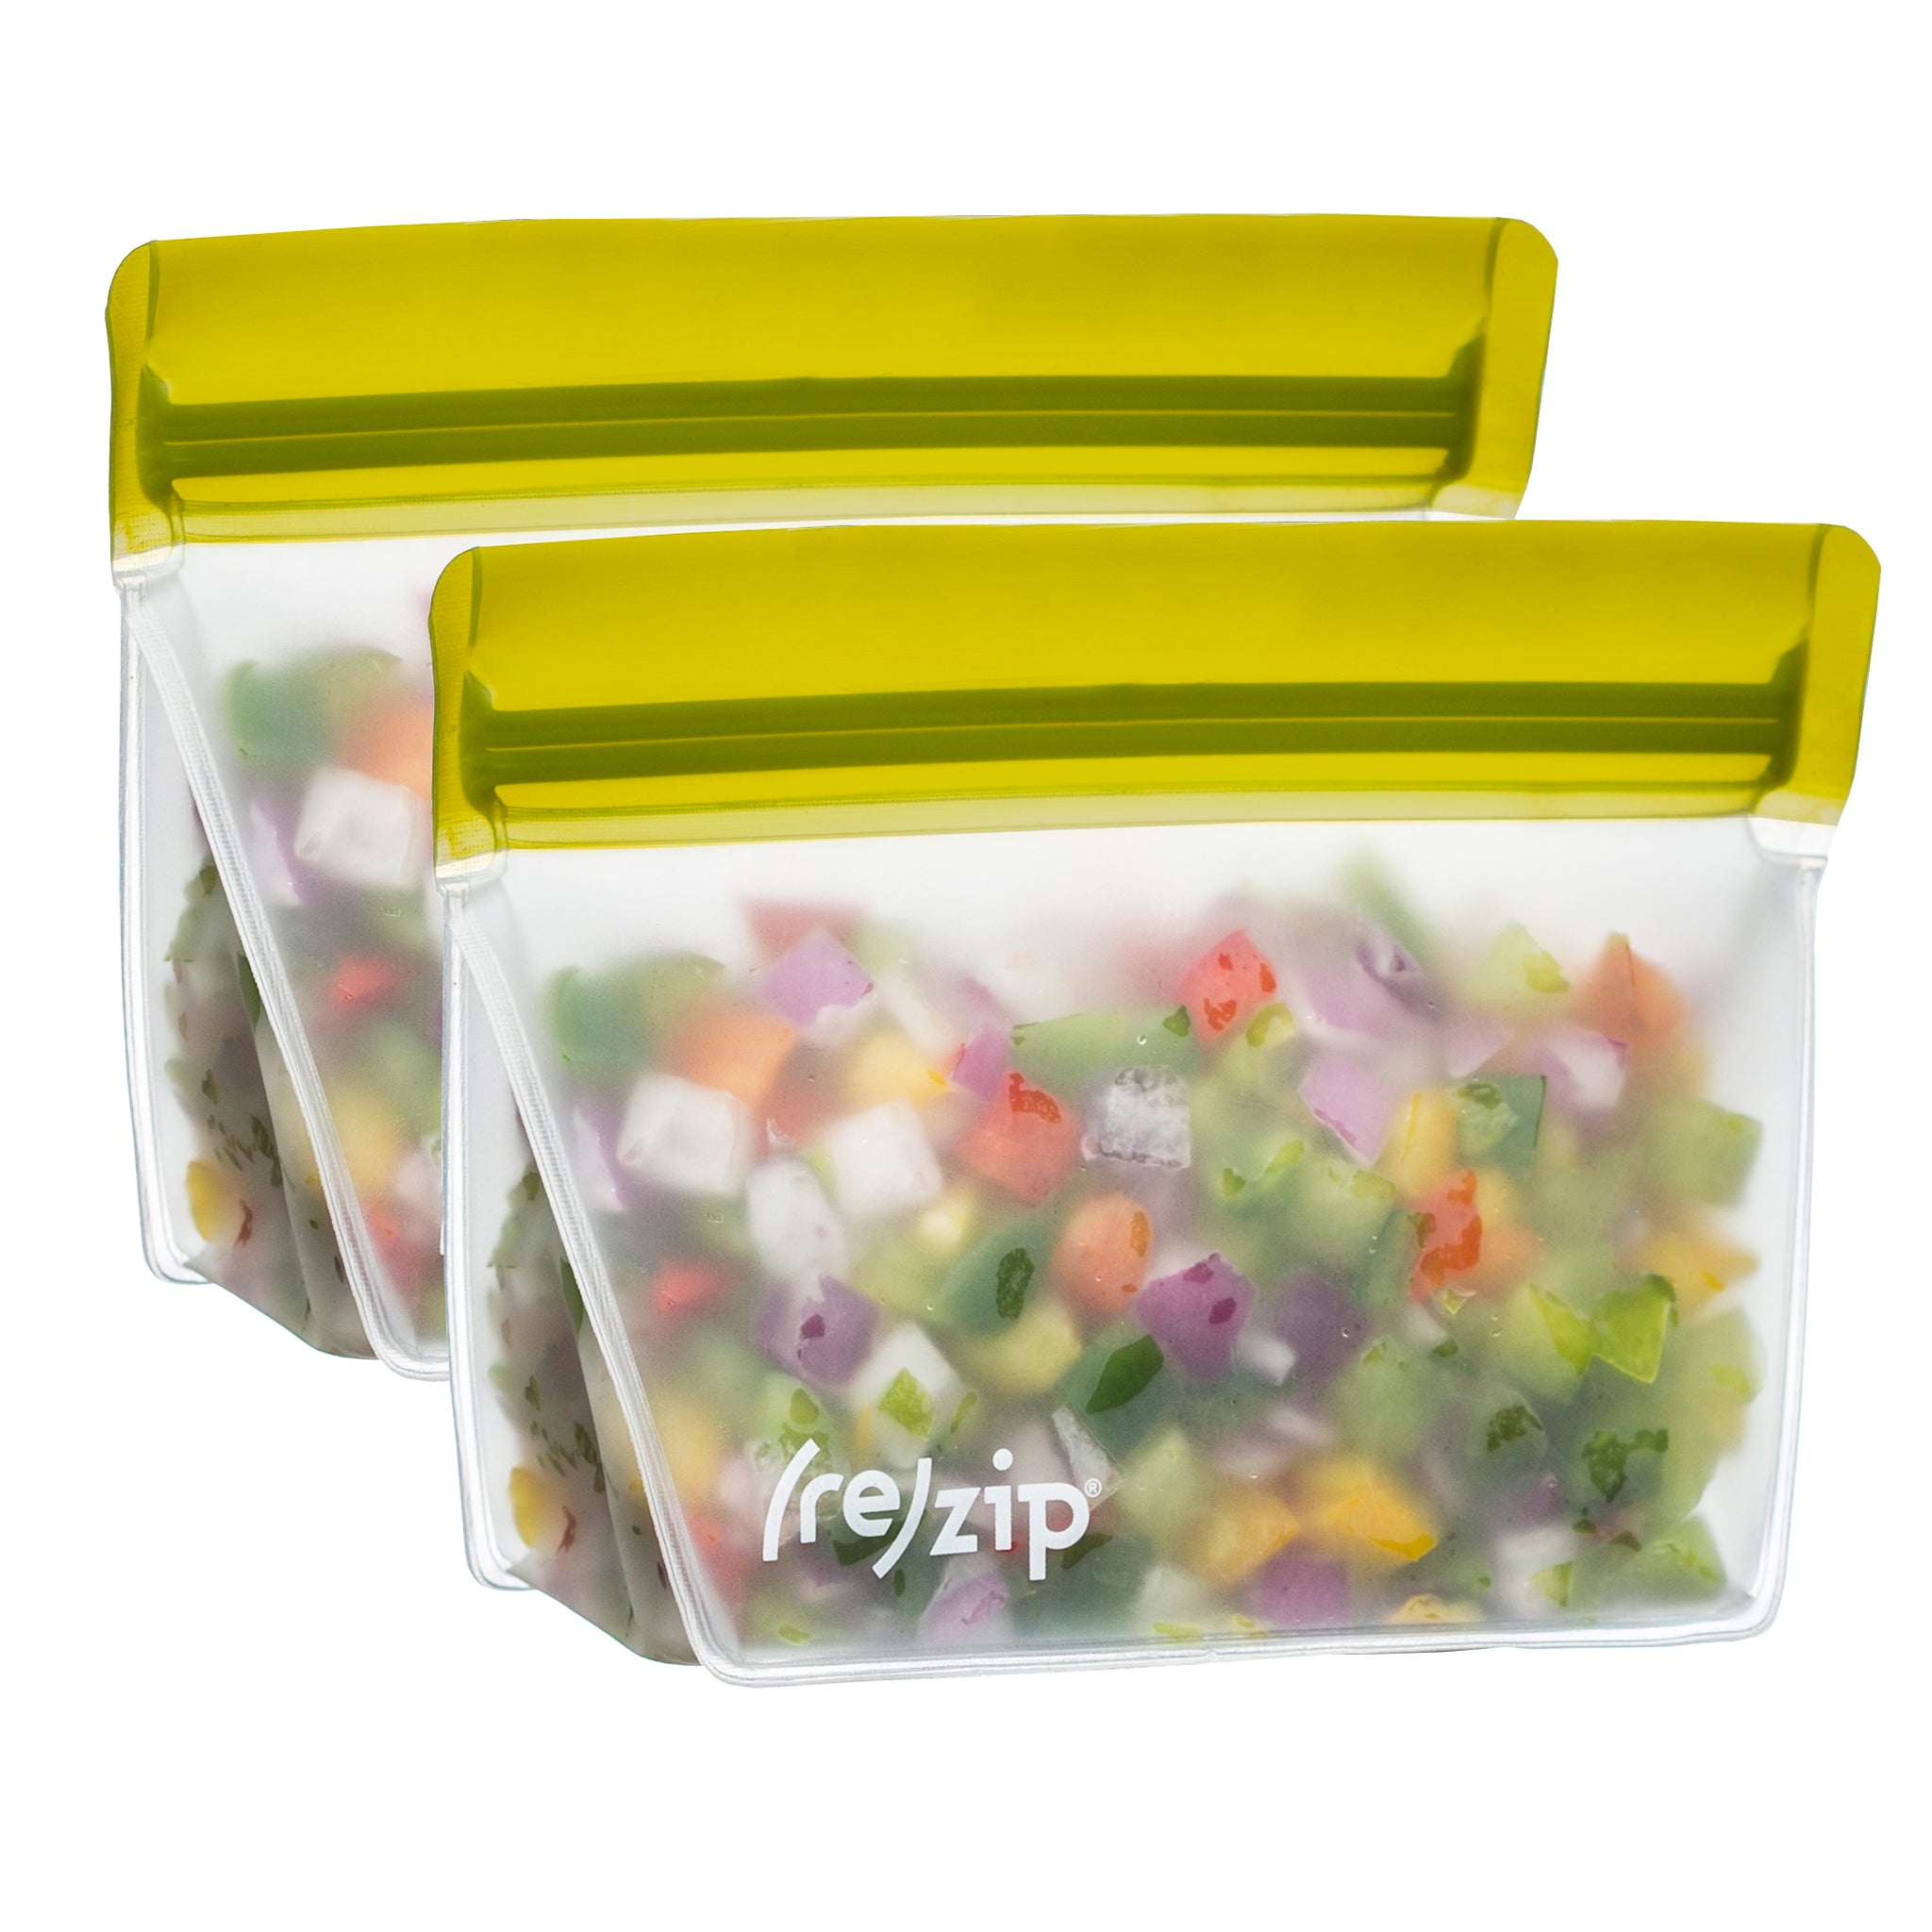 re)zip Reusable Leak-proof Food Storage Snack Stand-up Bag - 1-cup